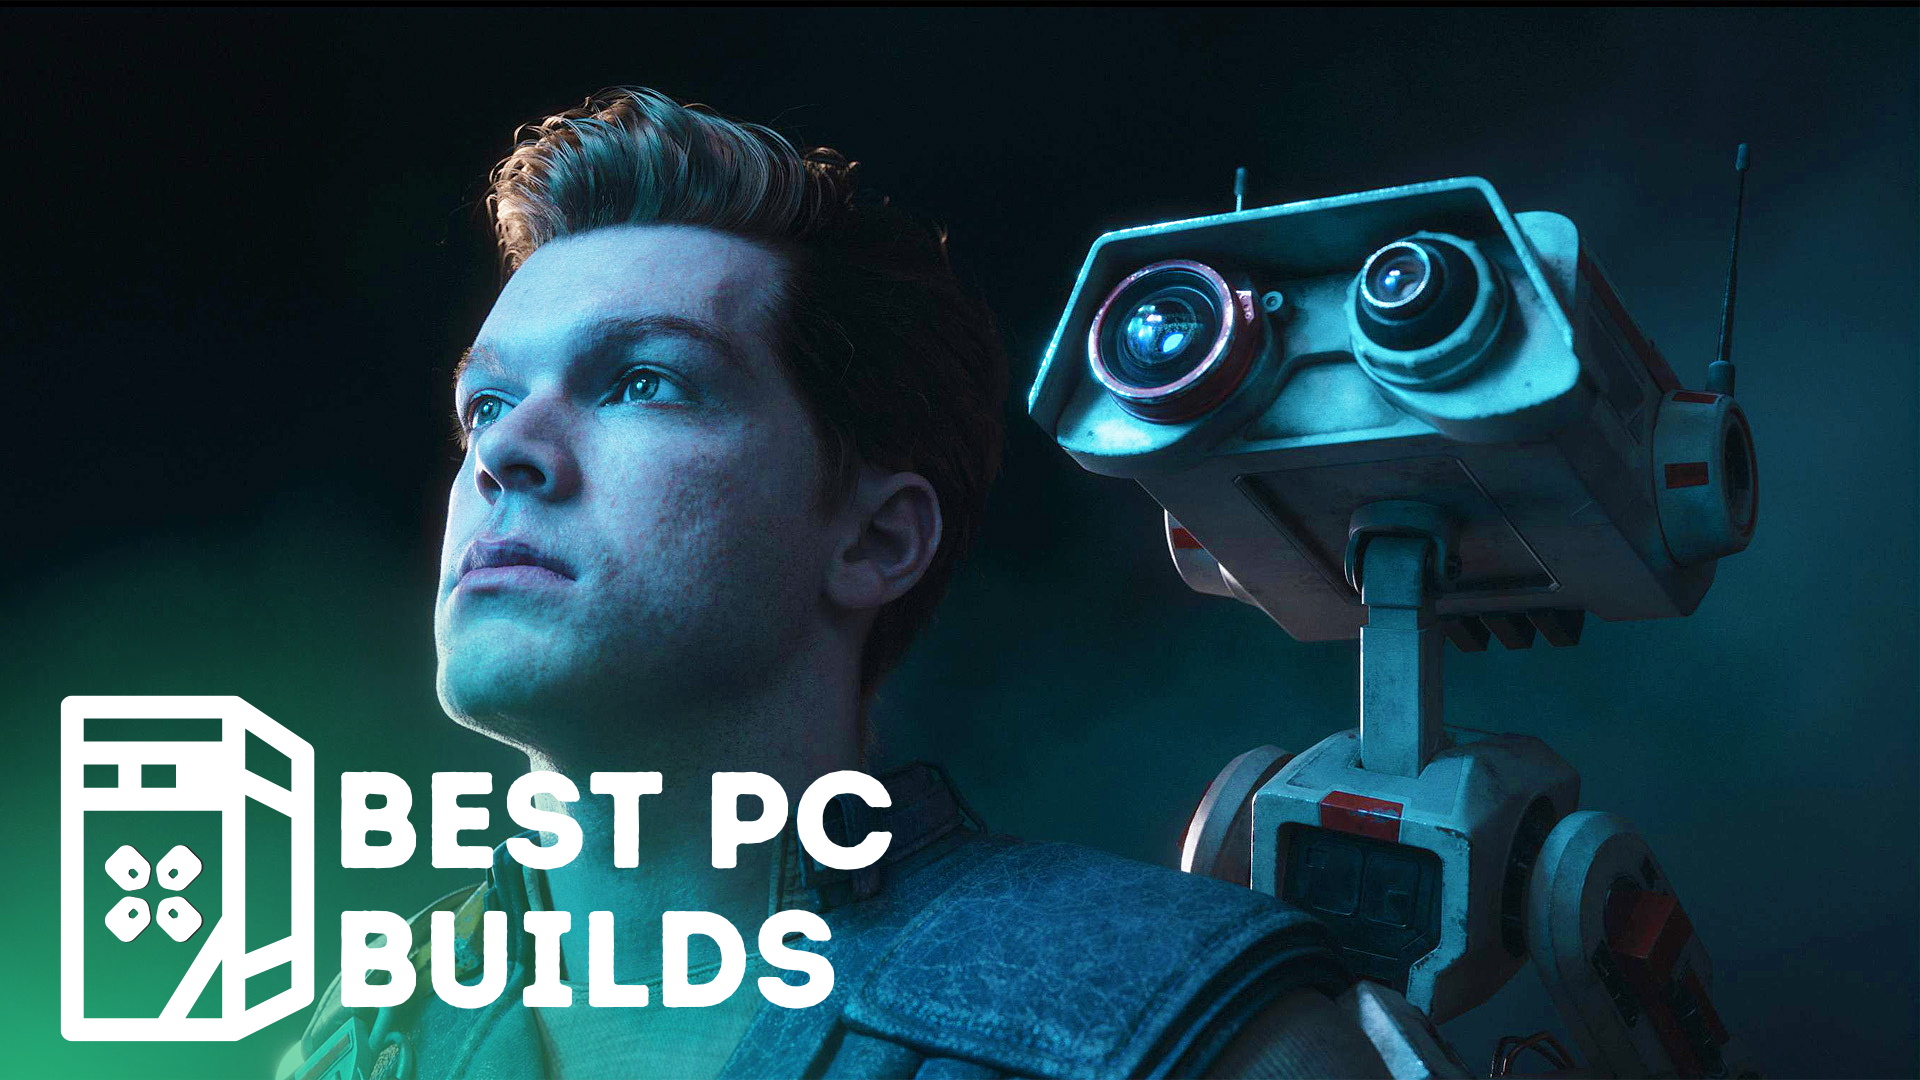 star wars jedi survivor poster image Best PC Build